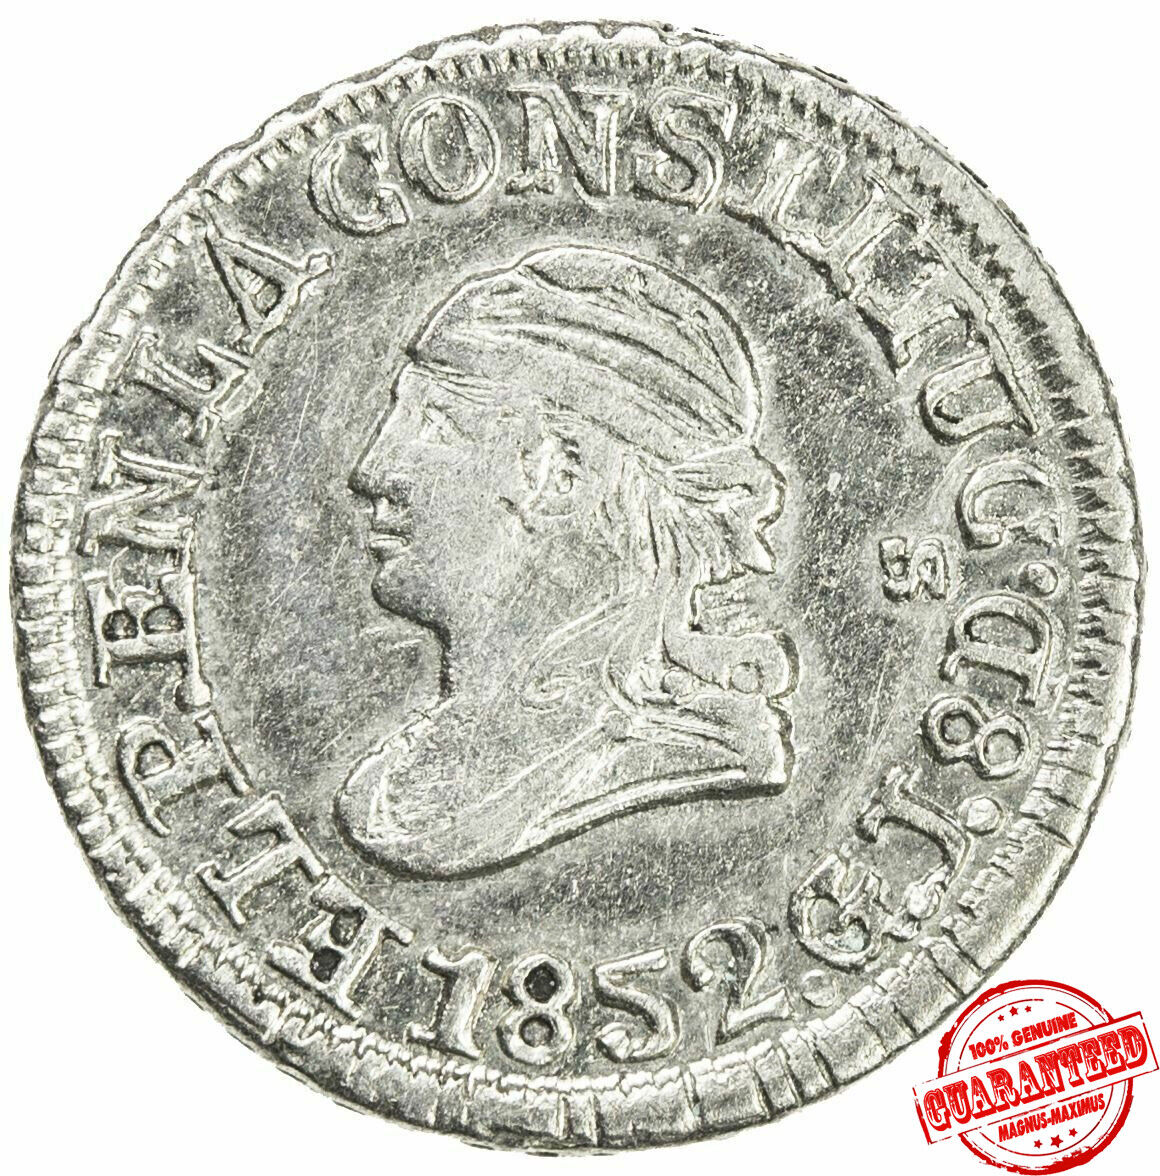 ECUADOR Republic, AR ¼ real, Quito, 1852, KM-36, AU. ABOUT UNCIRCULATED COIN